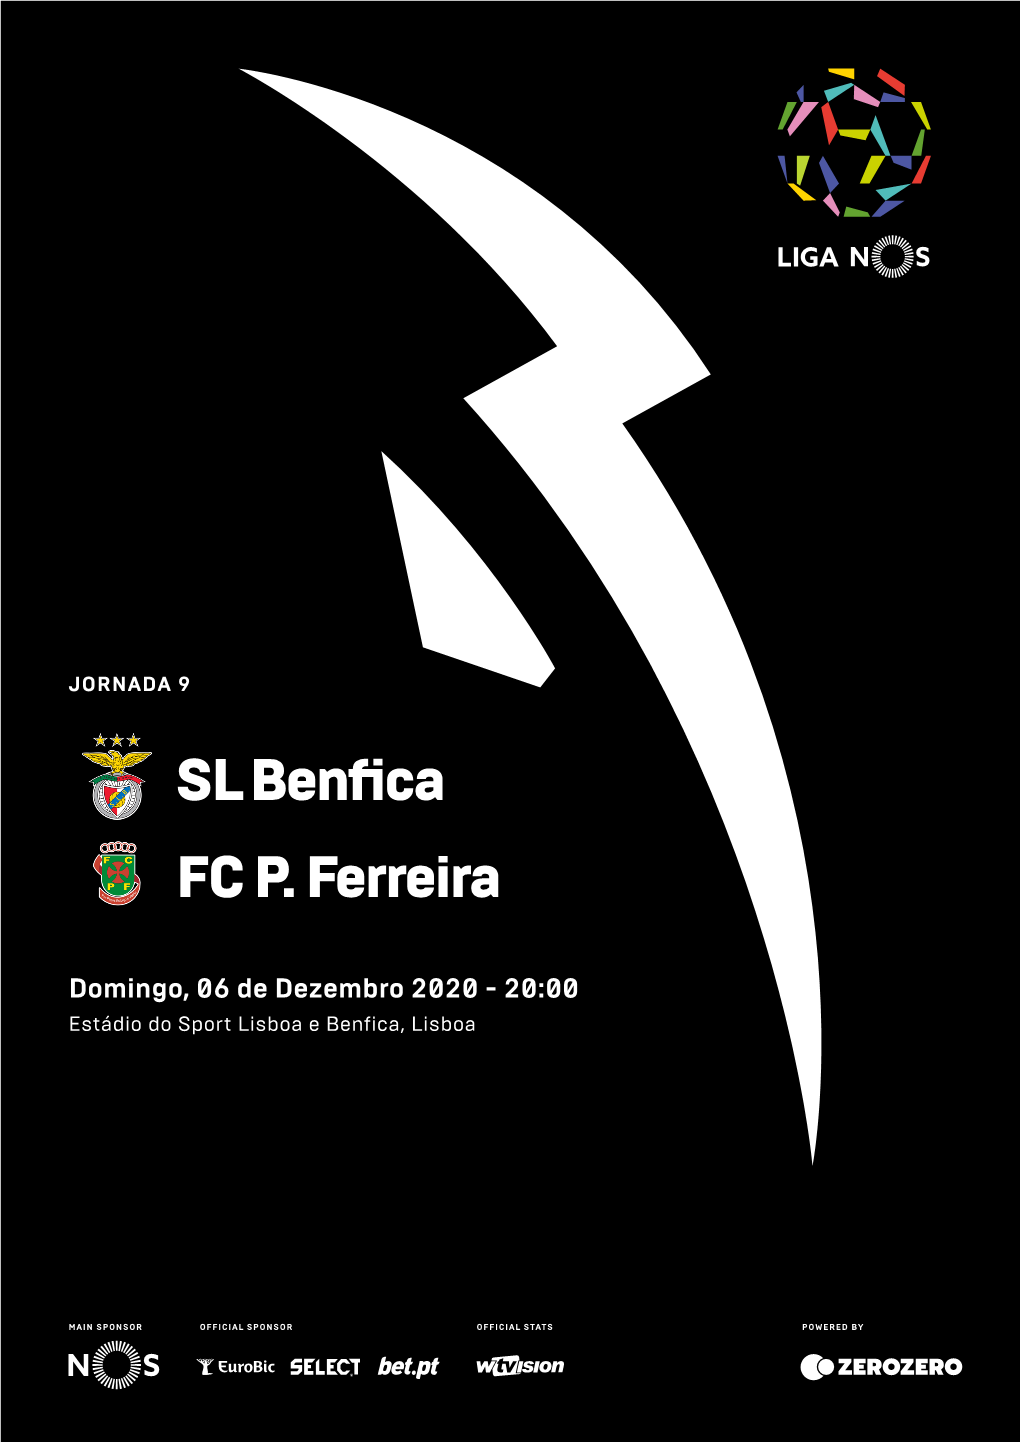 SL Benfica FC P. Ferreira